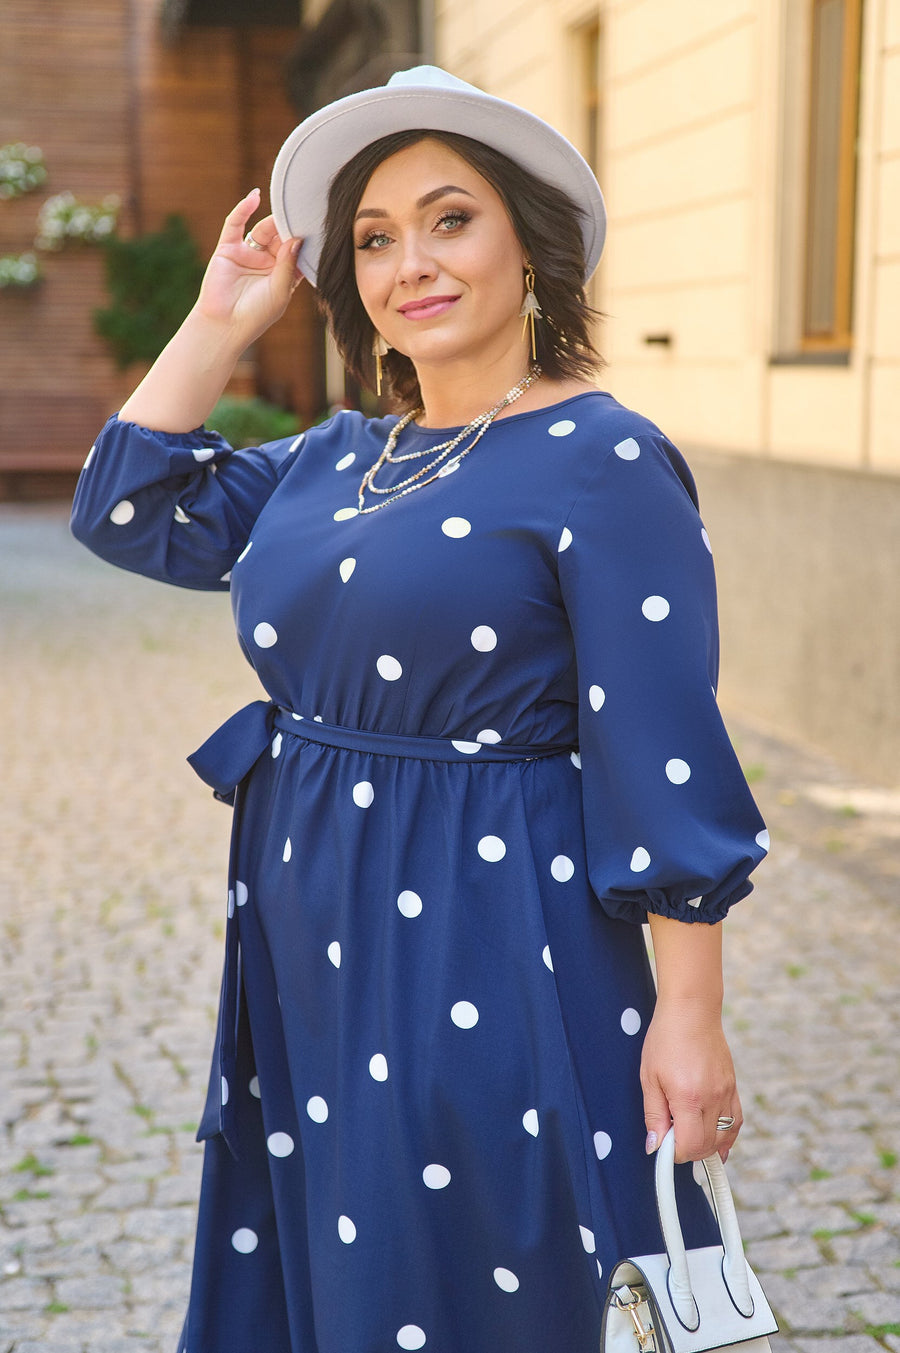 Polka dot midi-length dress